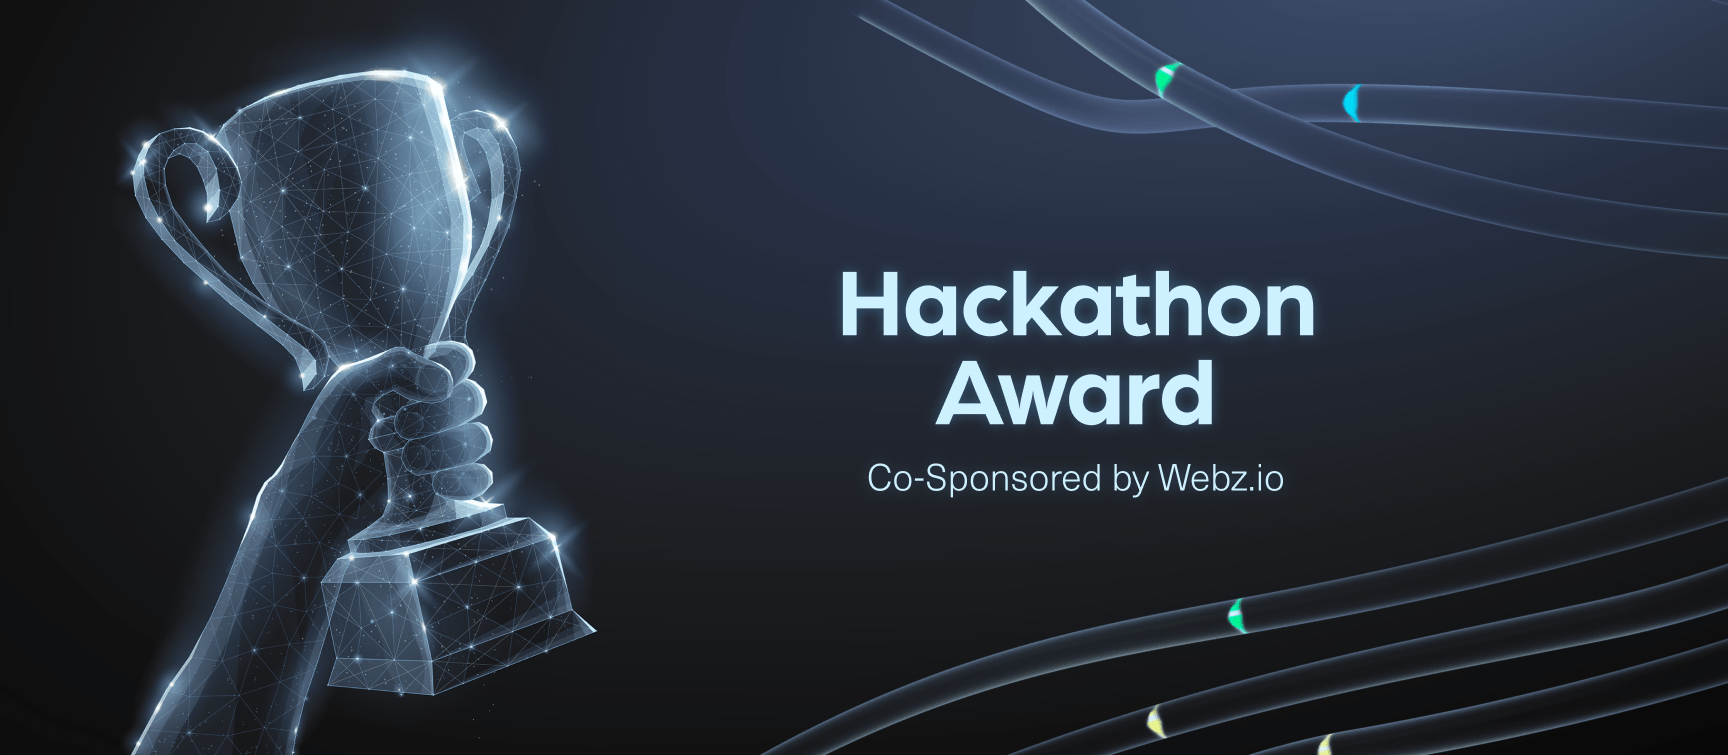 The Hackathon Award